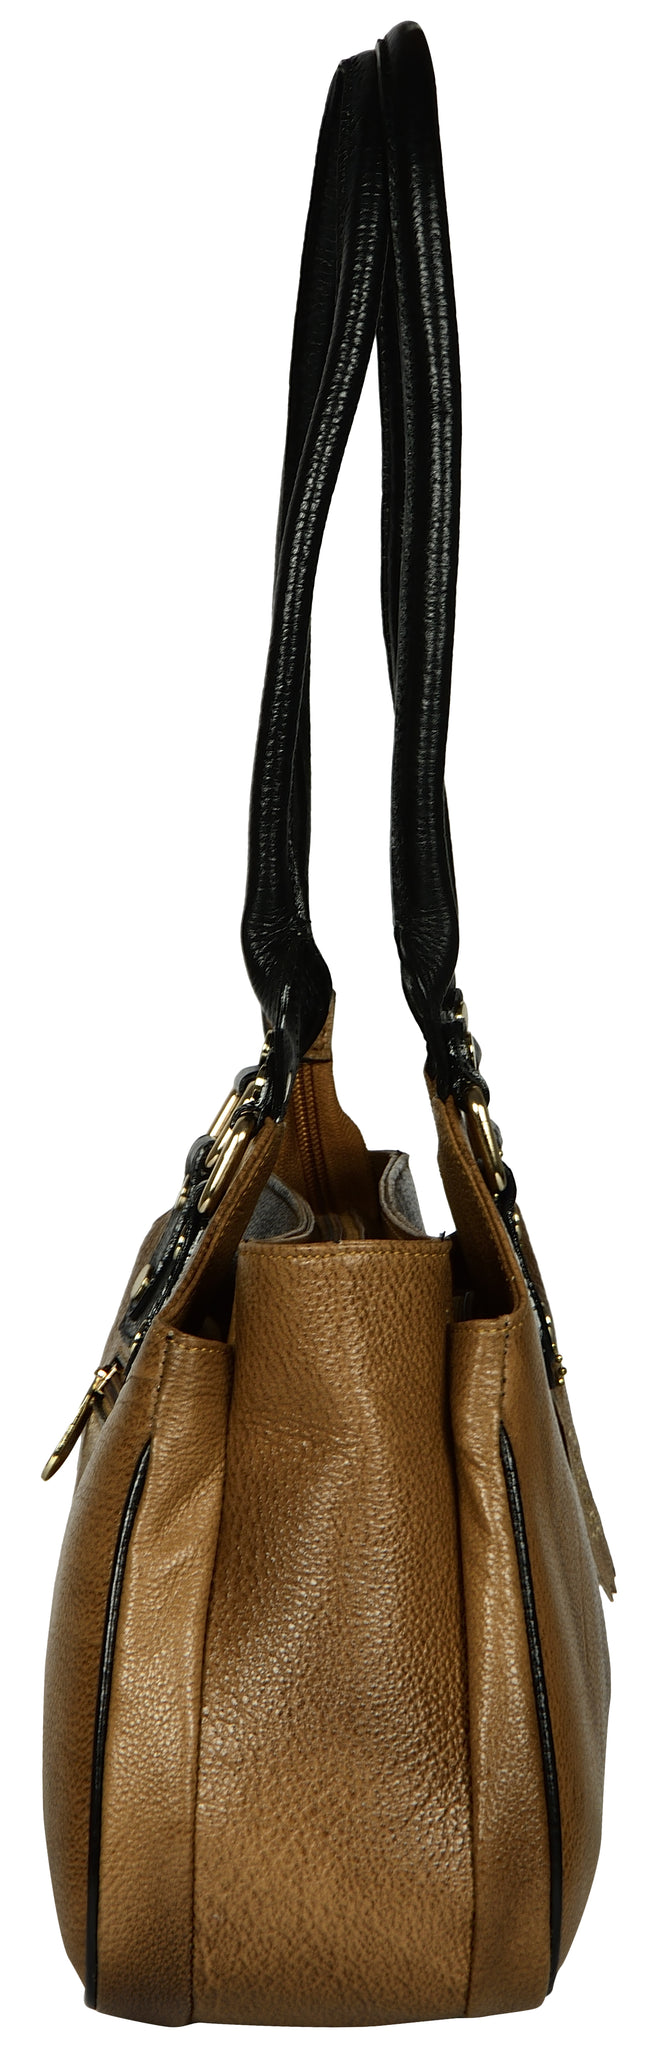 Women's light brown leather handbag